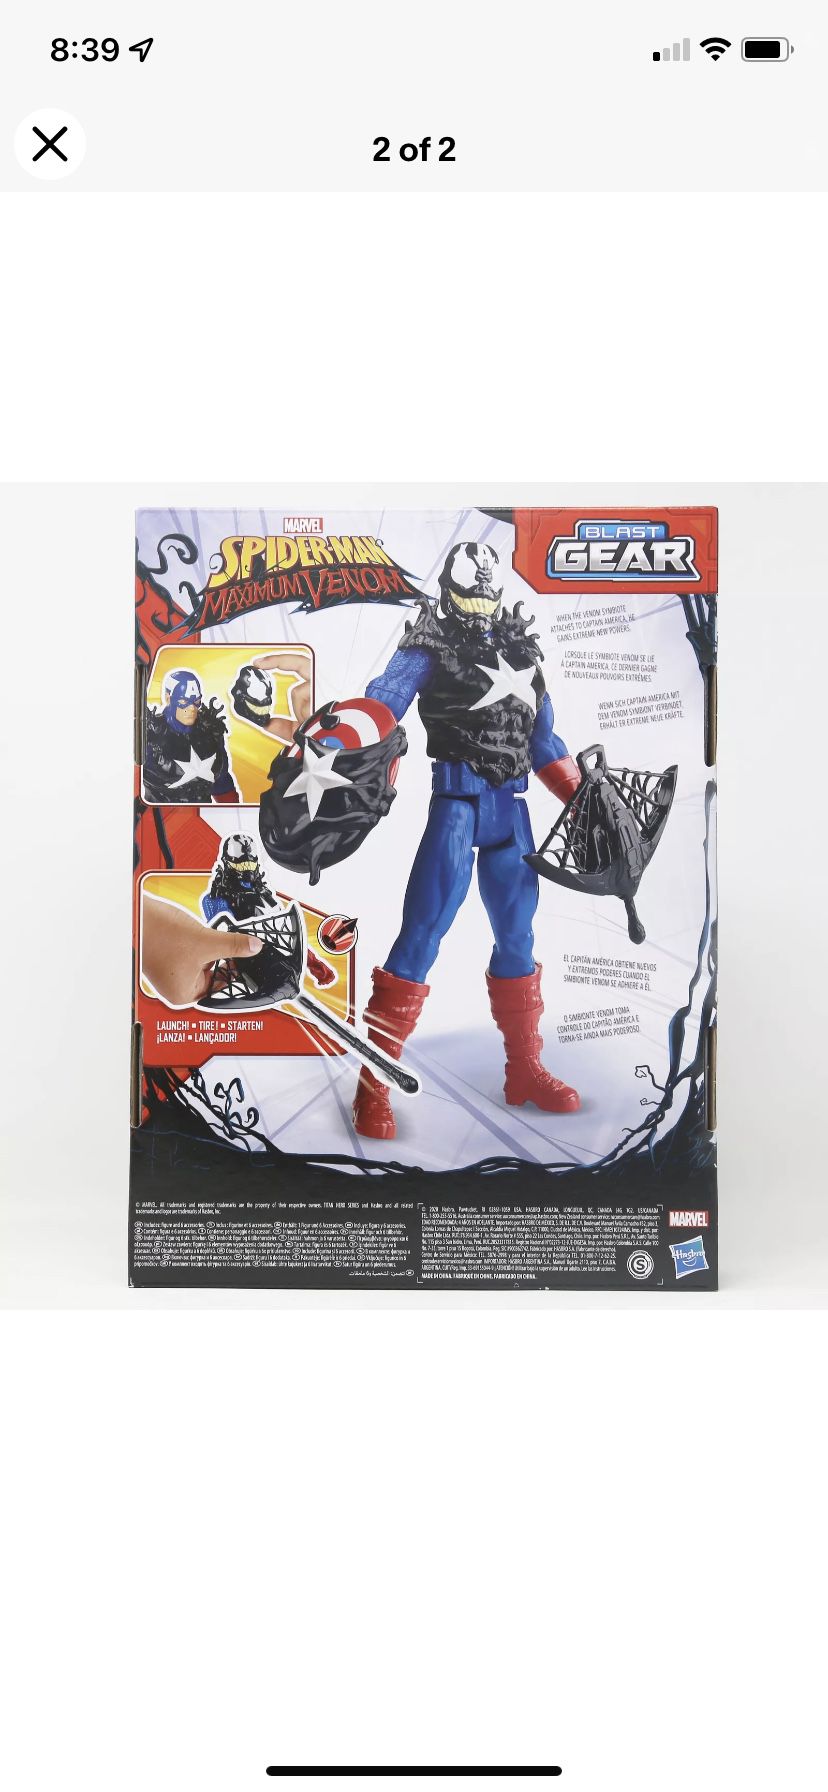 Spider-Man Maximum Venom Titan Hero Captain America Blast Gear Titan Hero Series New in box  12” tall